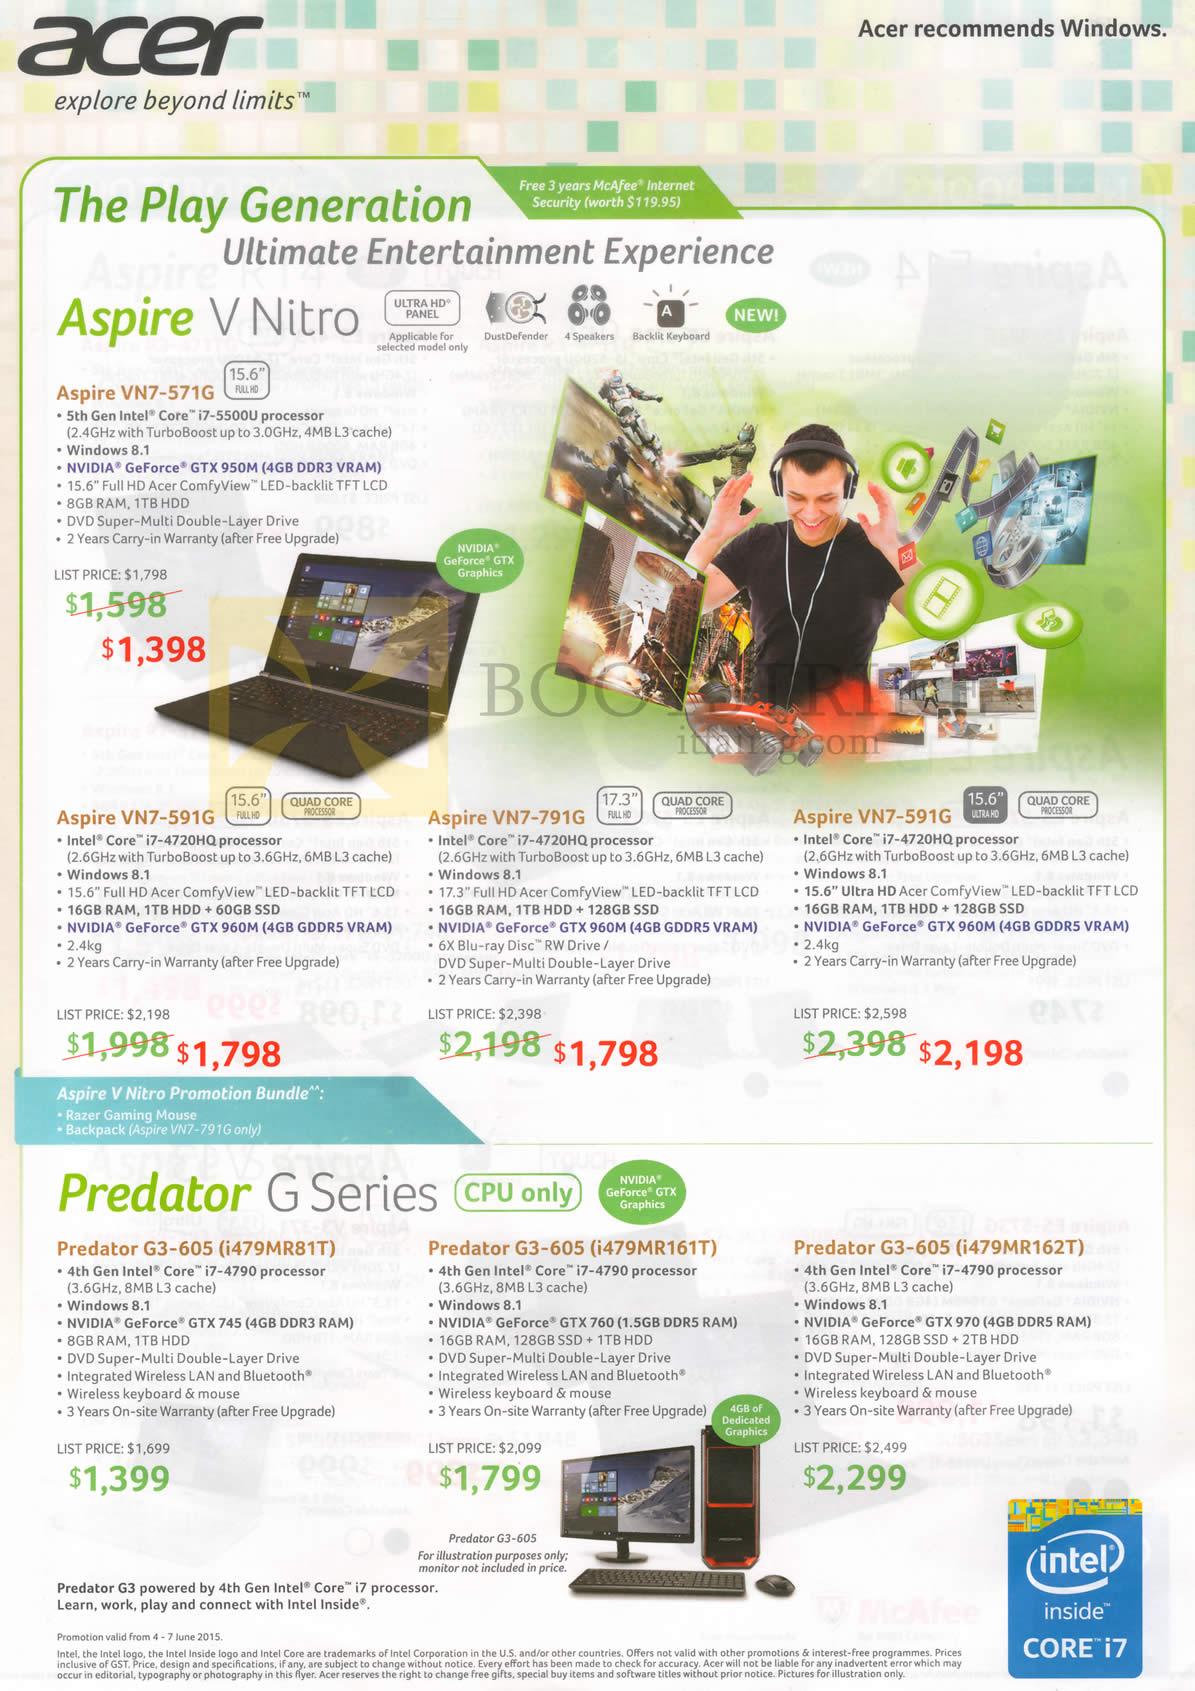 PC SHOW 2015 price list image brochure of Acer Notebooks Desktop PCs Aspire V Nitro, Predator G Series Aspire VN7-571G, 591G, 791G, Predator G3-605